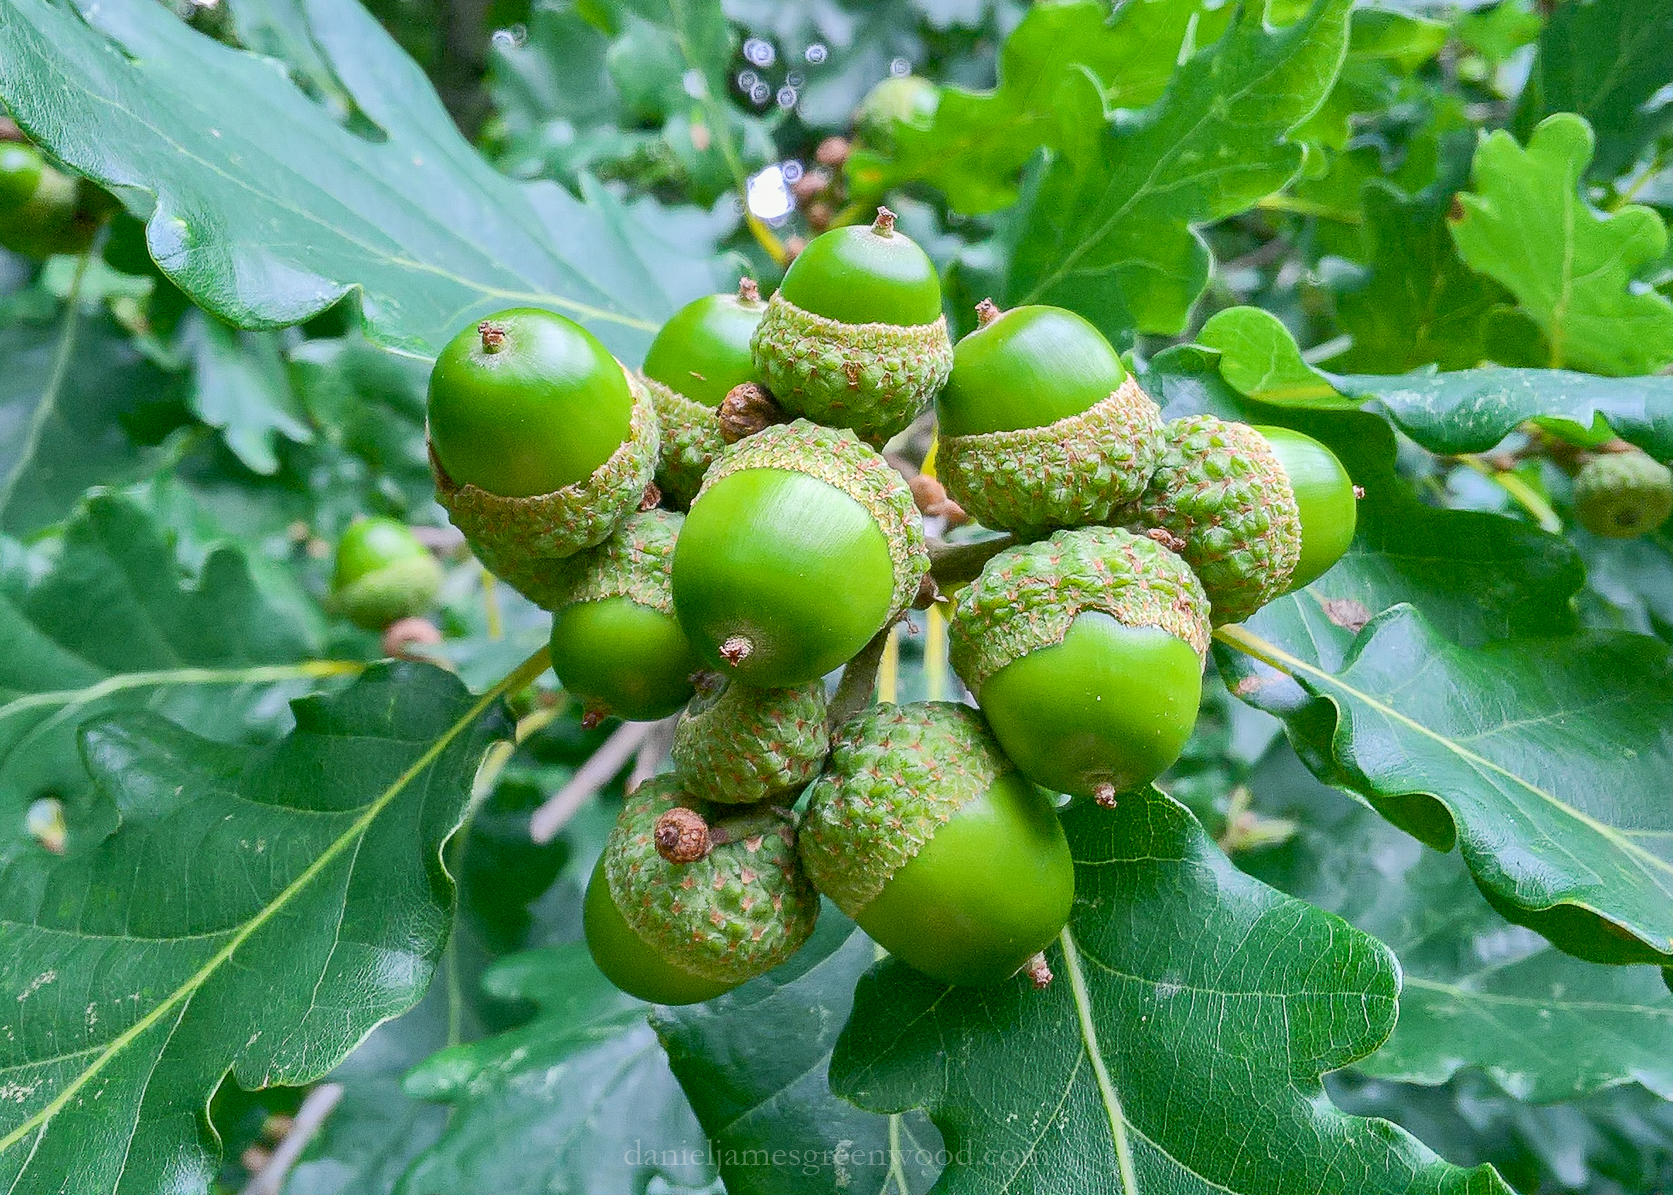 10 acorns on one bunch